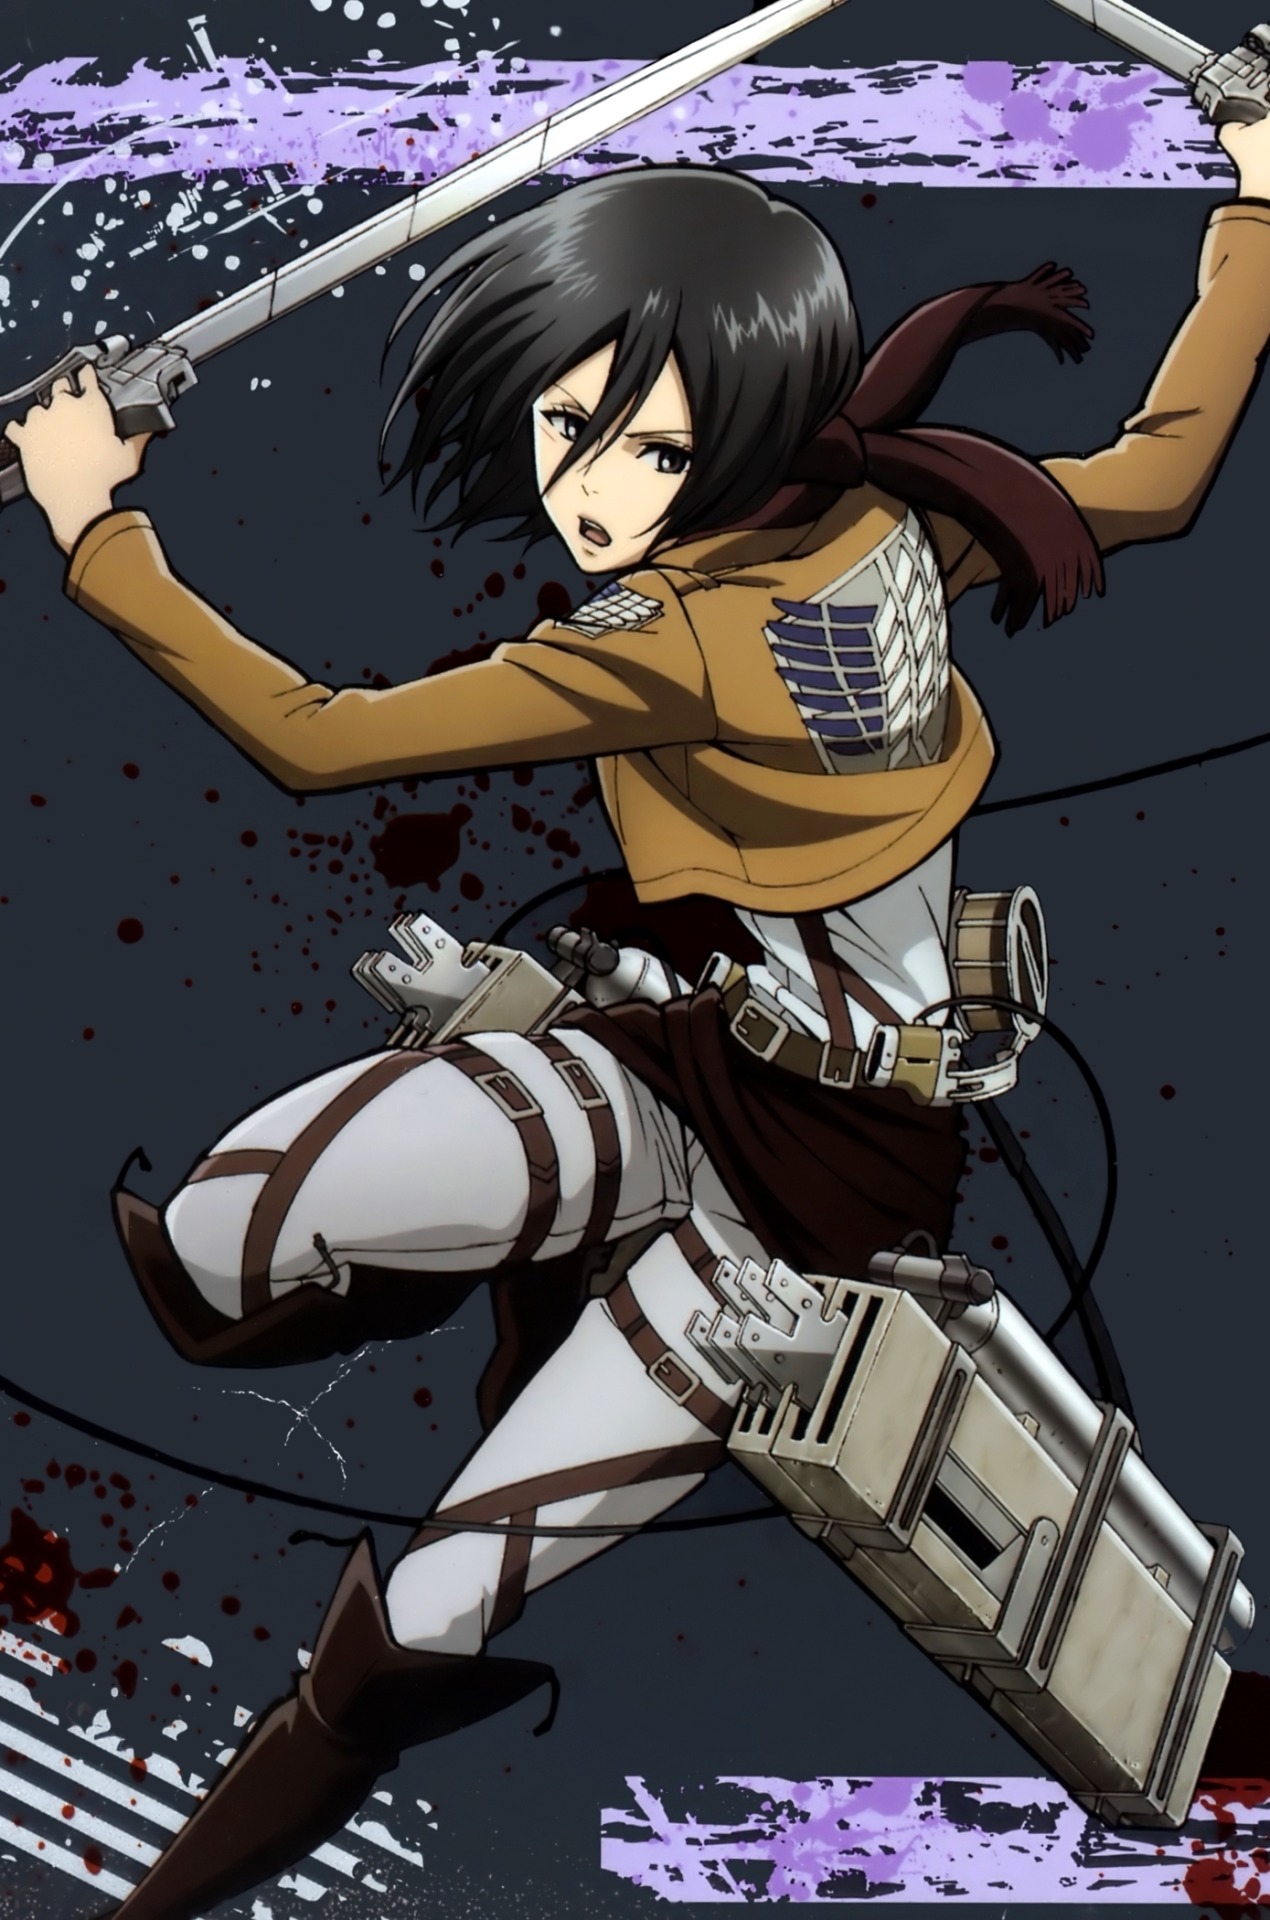 Image of Mikasa Ackerman anime girl